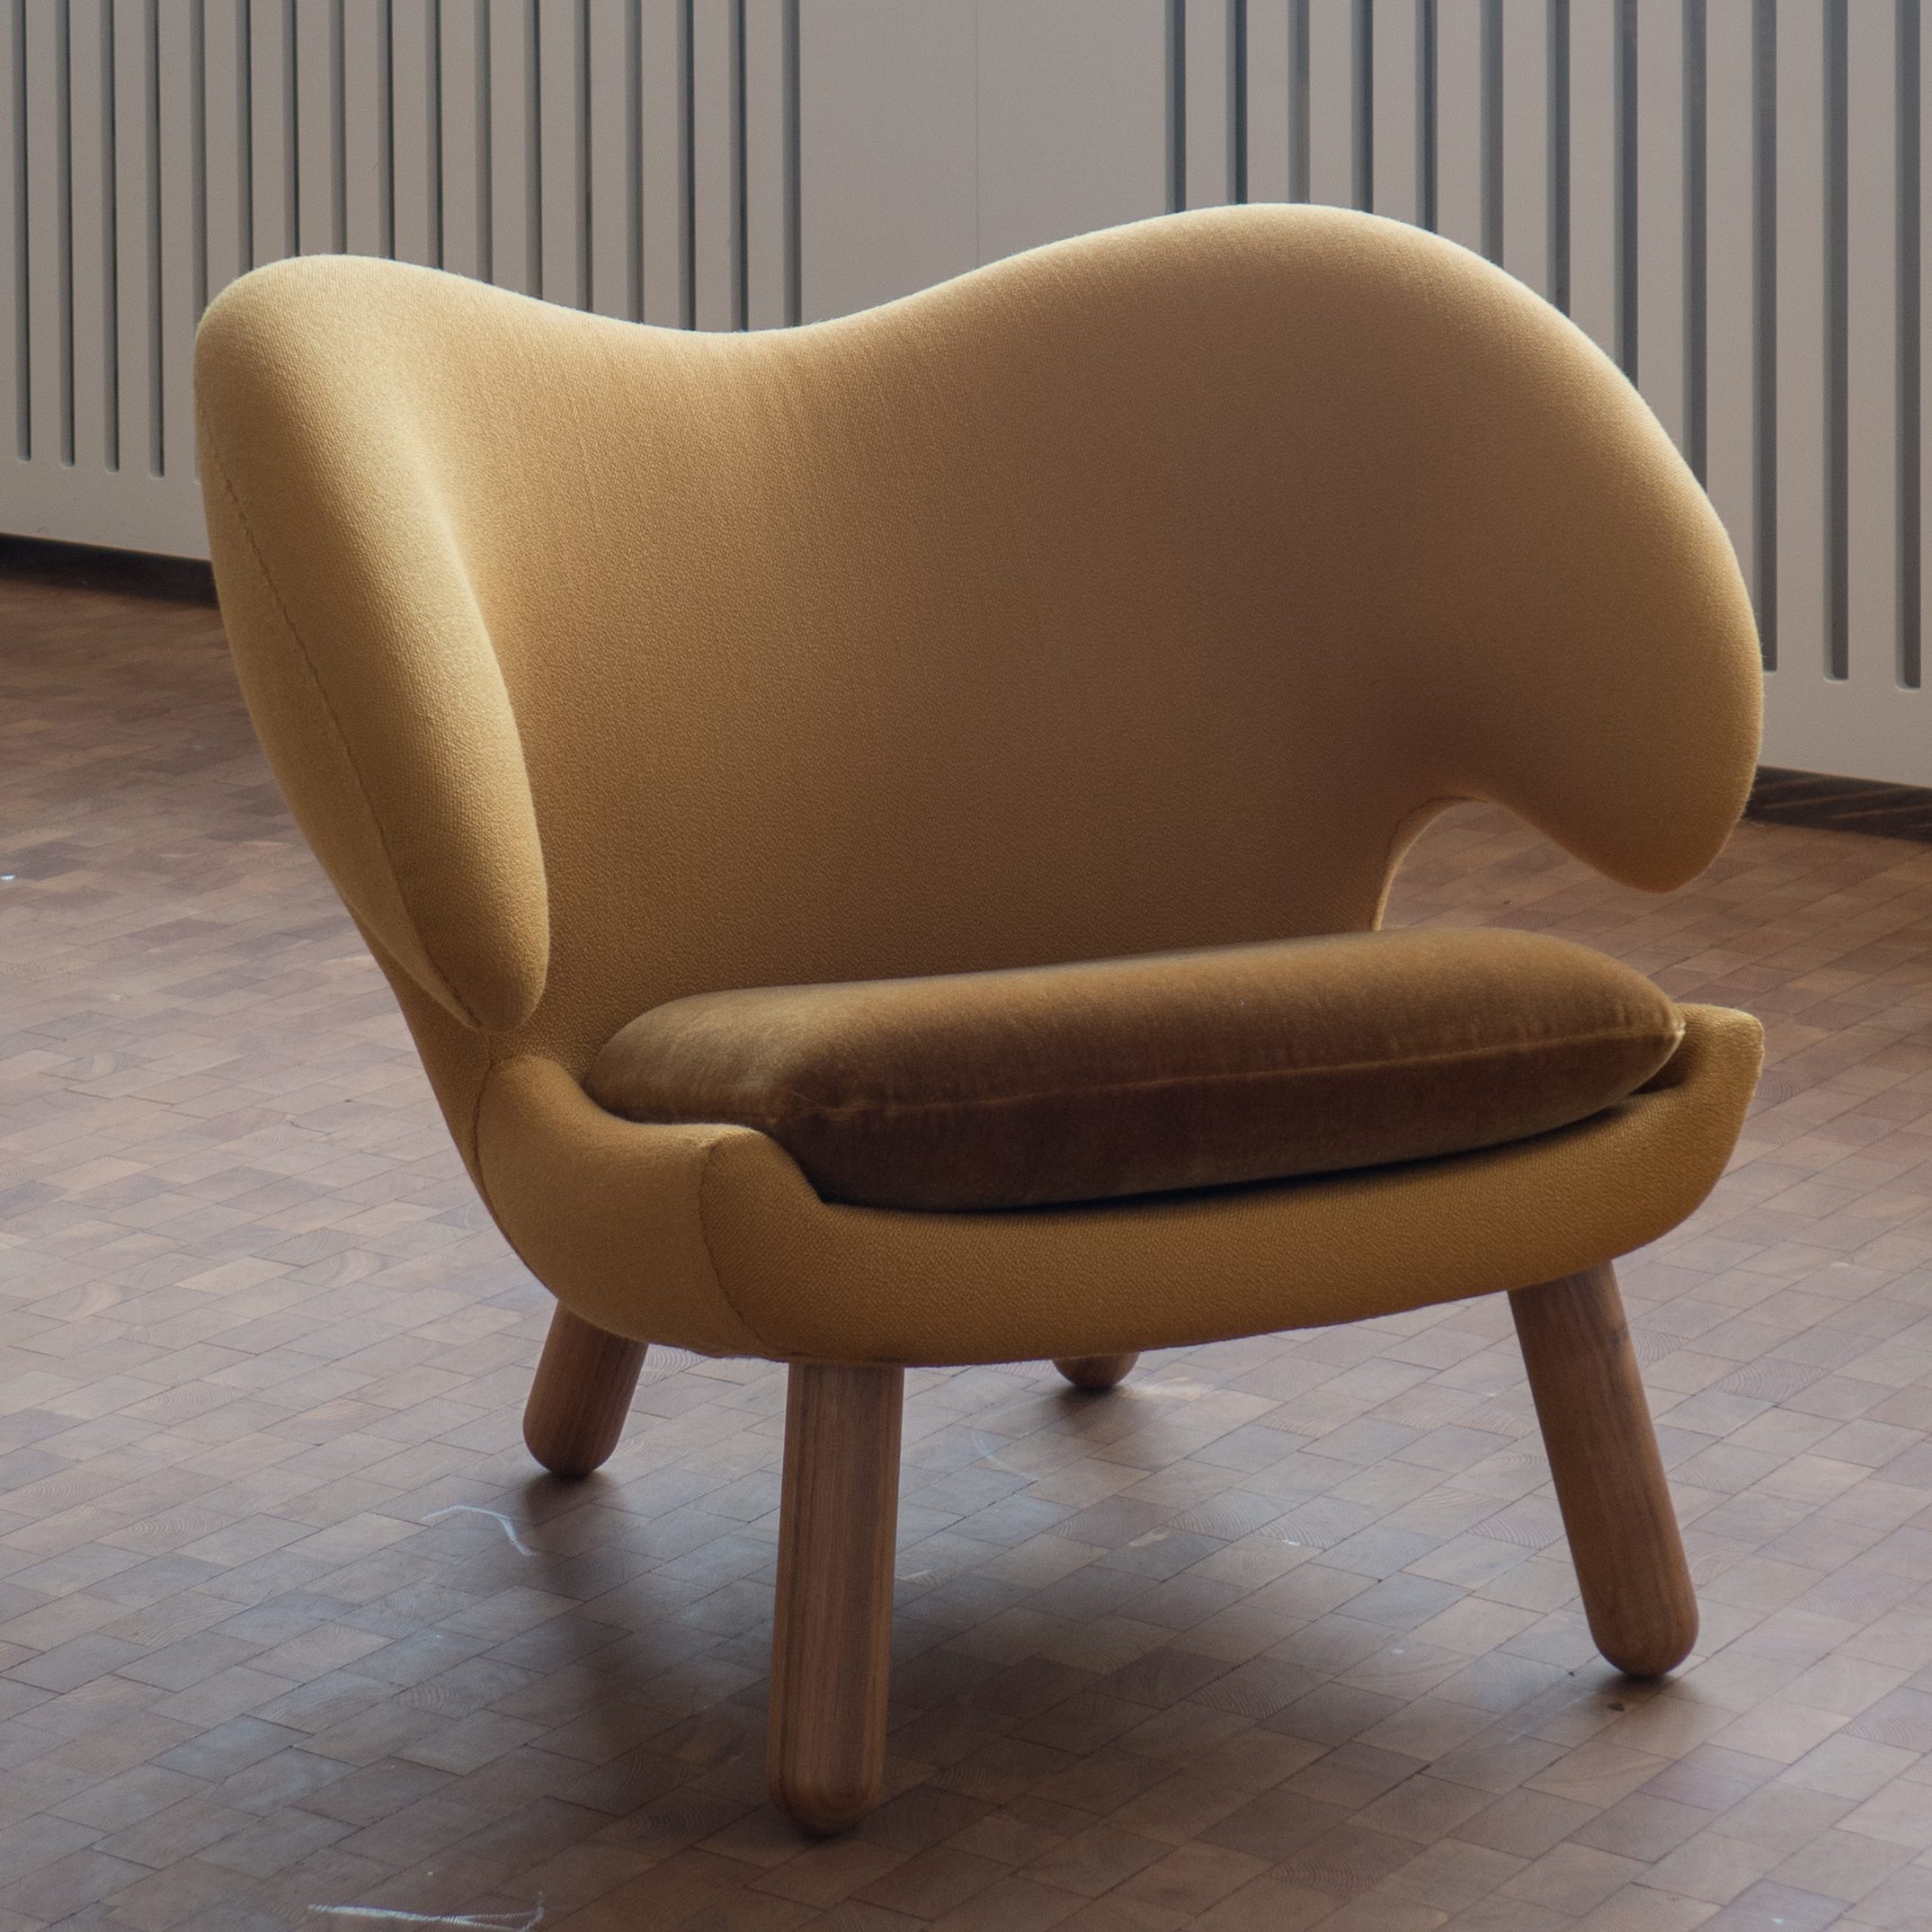 Finn Juhl Danish Chairs Danish Design Review